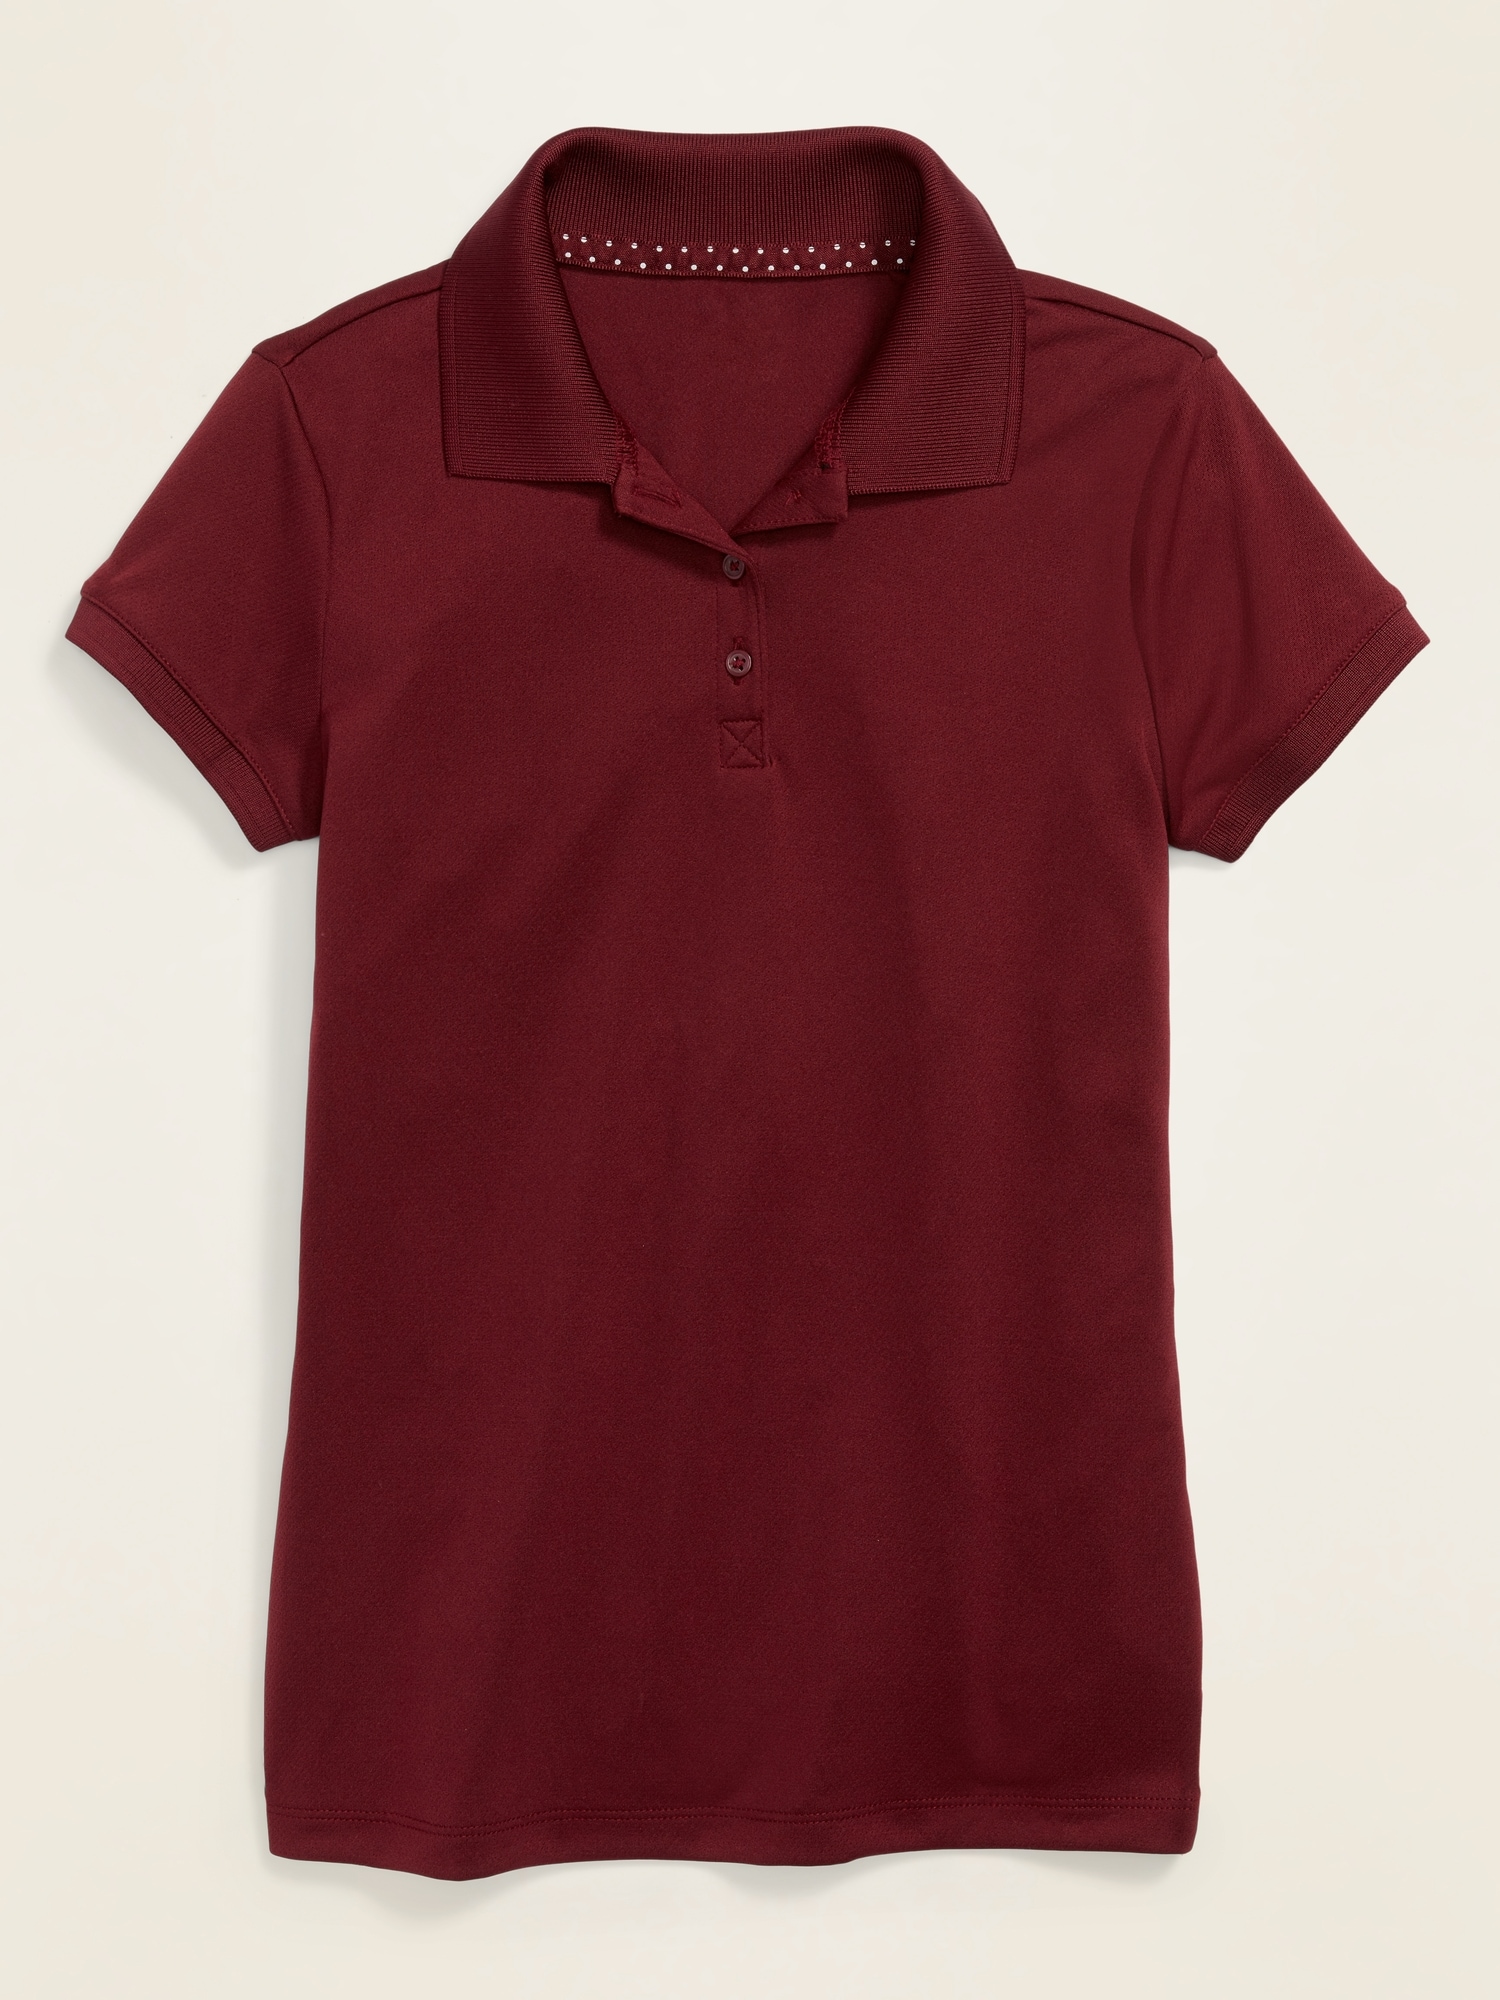 School Uniform Moisture-Wicking Polo Shirt for Girls